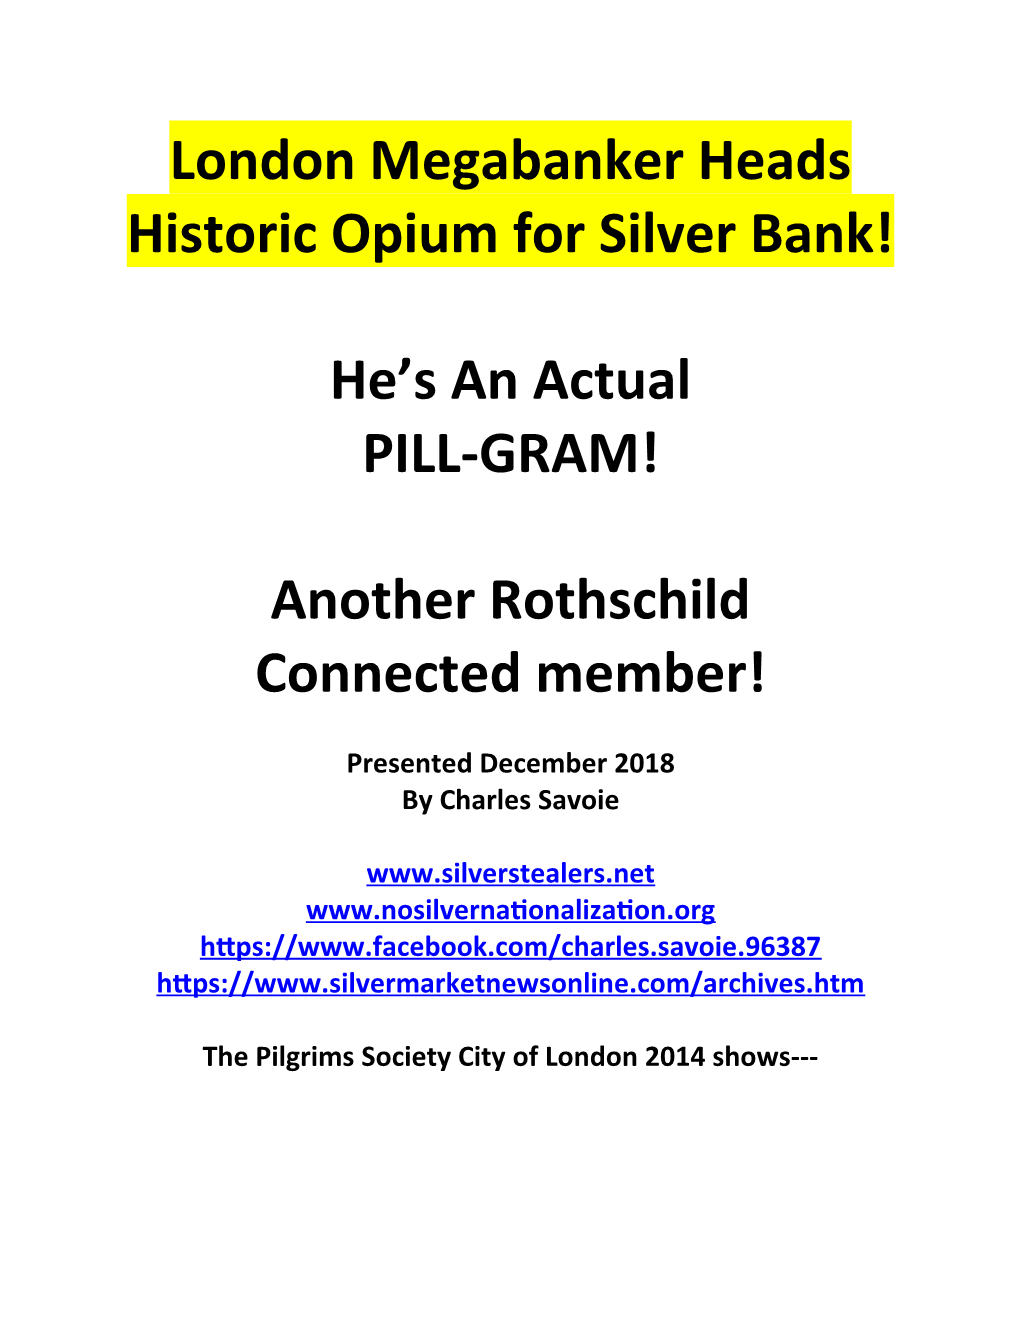 London Megabanker Heads Historic Opium for Silver Bank! He's An